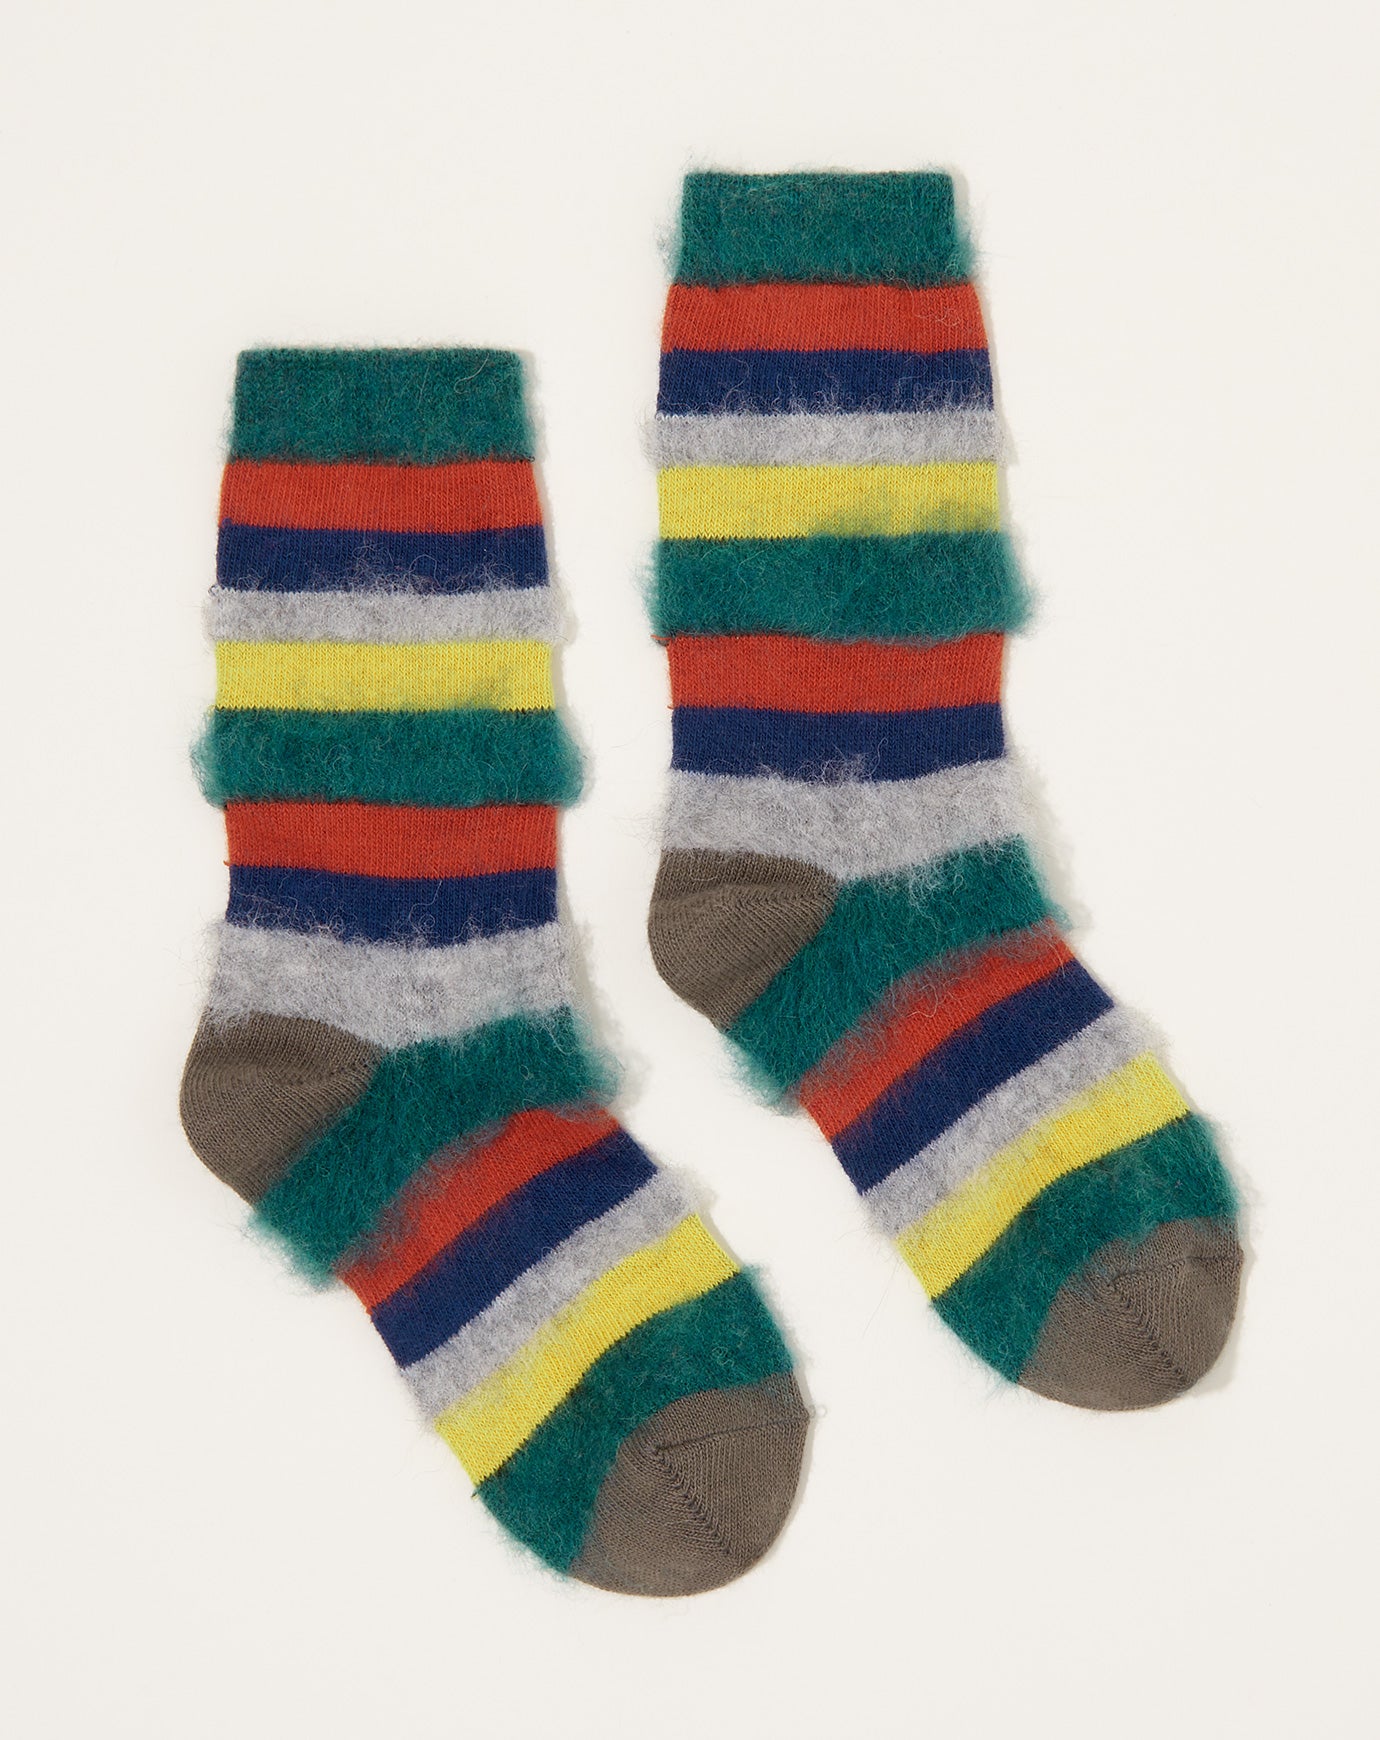 Exquisite J Brushed Mohair Bright Stripe Socks